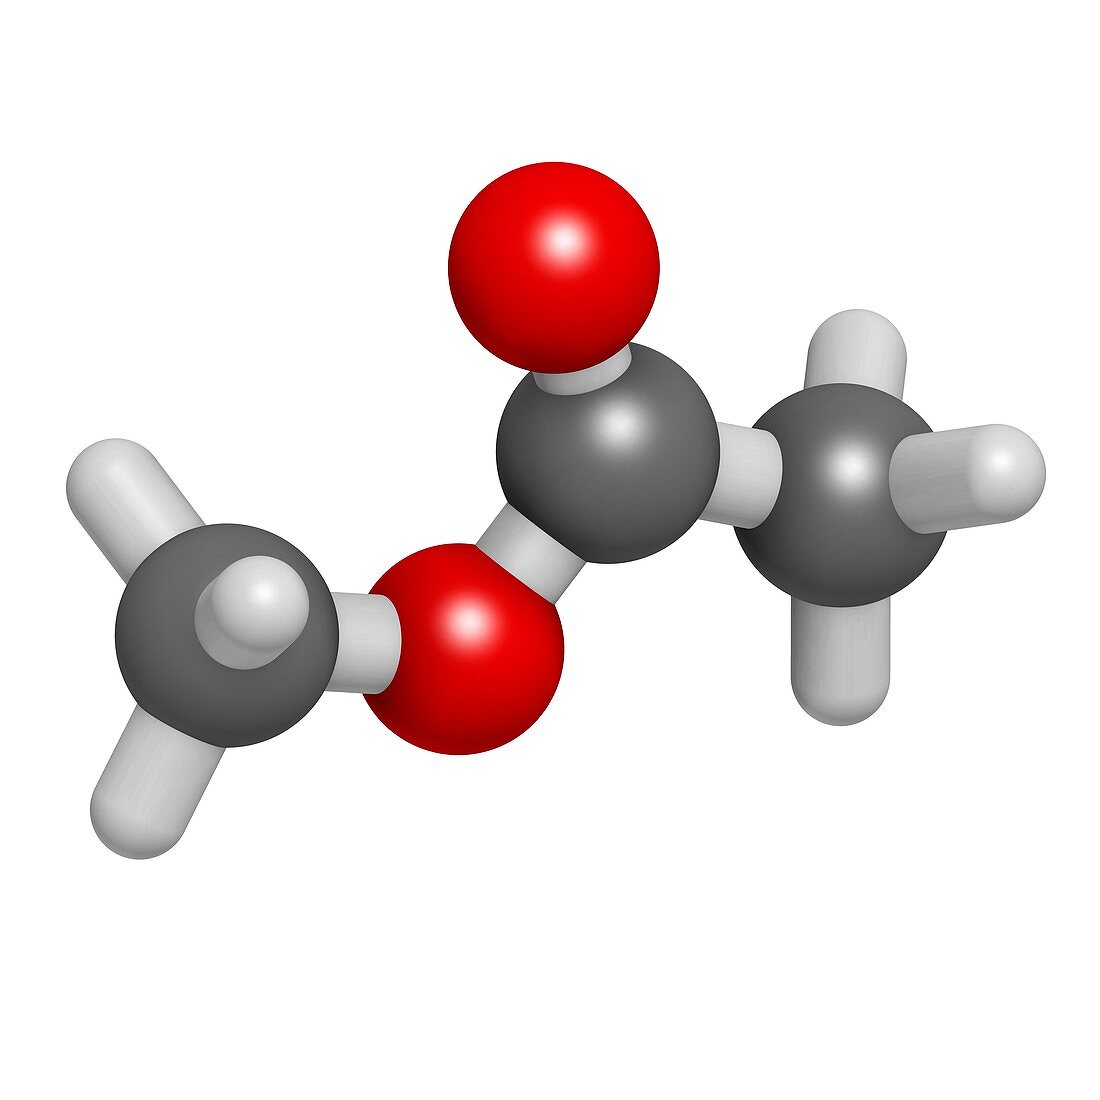 Methyl acetate solvent molecule